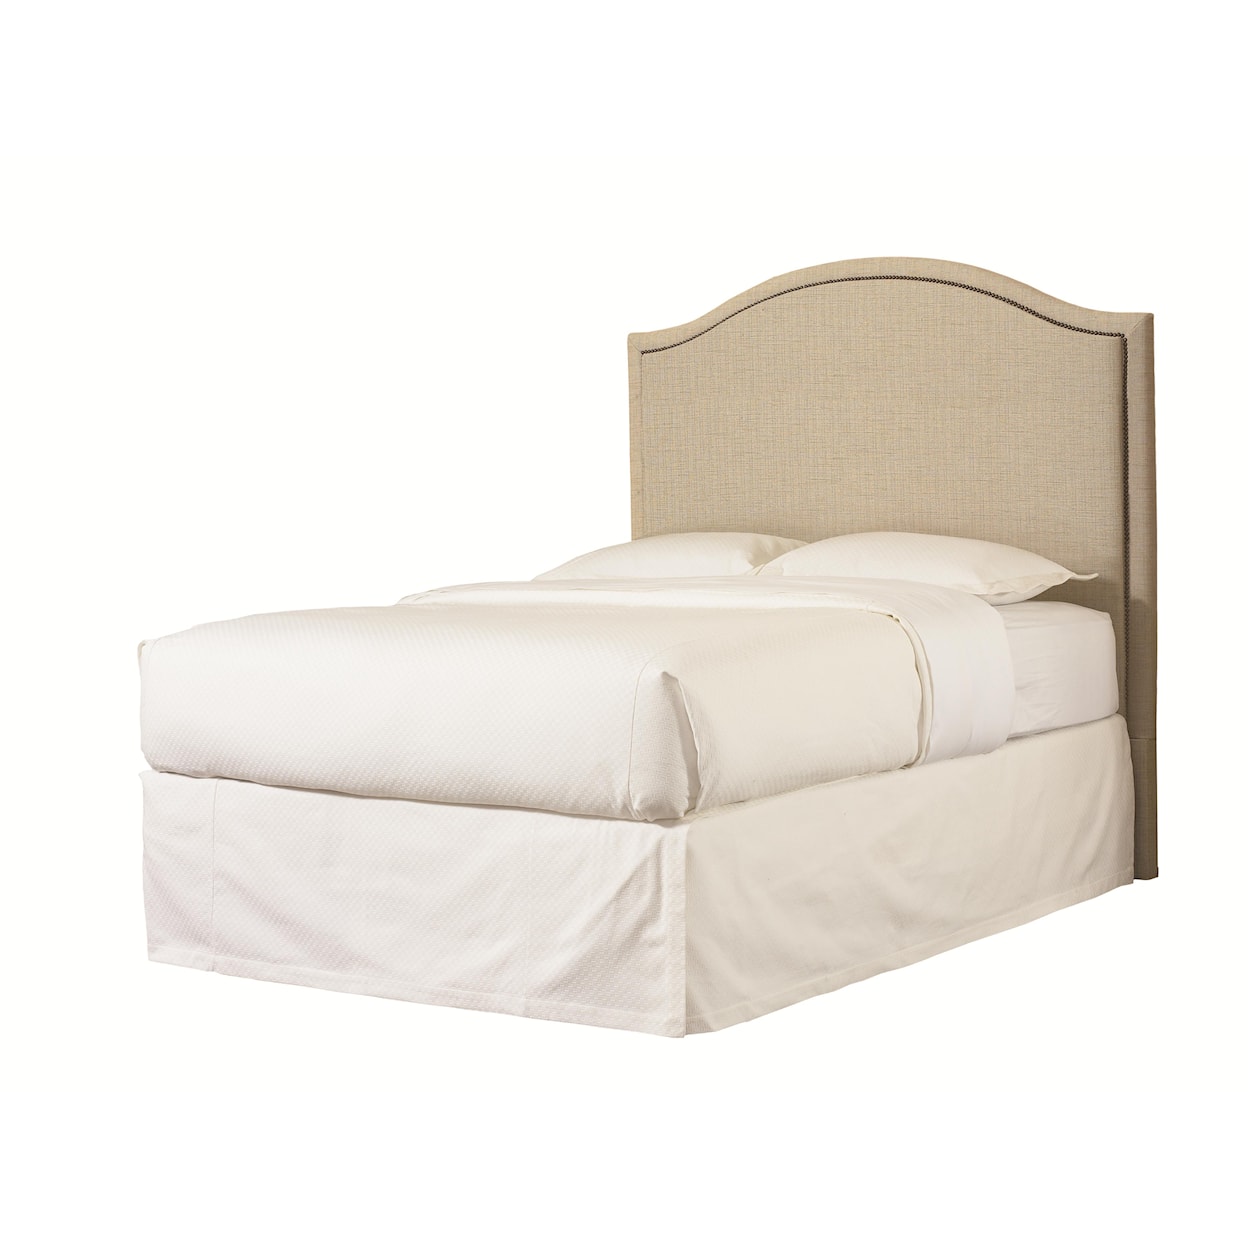 Bassett Custom Upholstered Beds Queen Vienna Upholstered Headboard